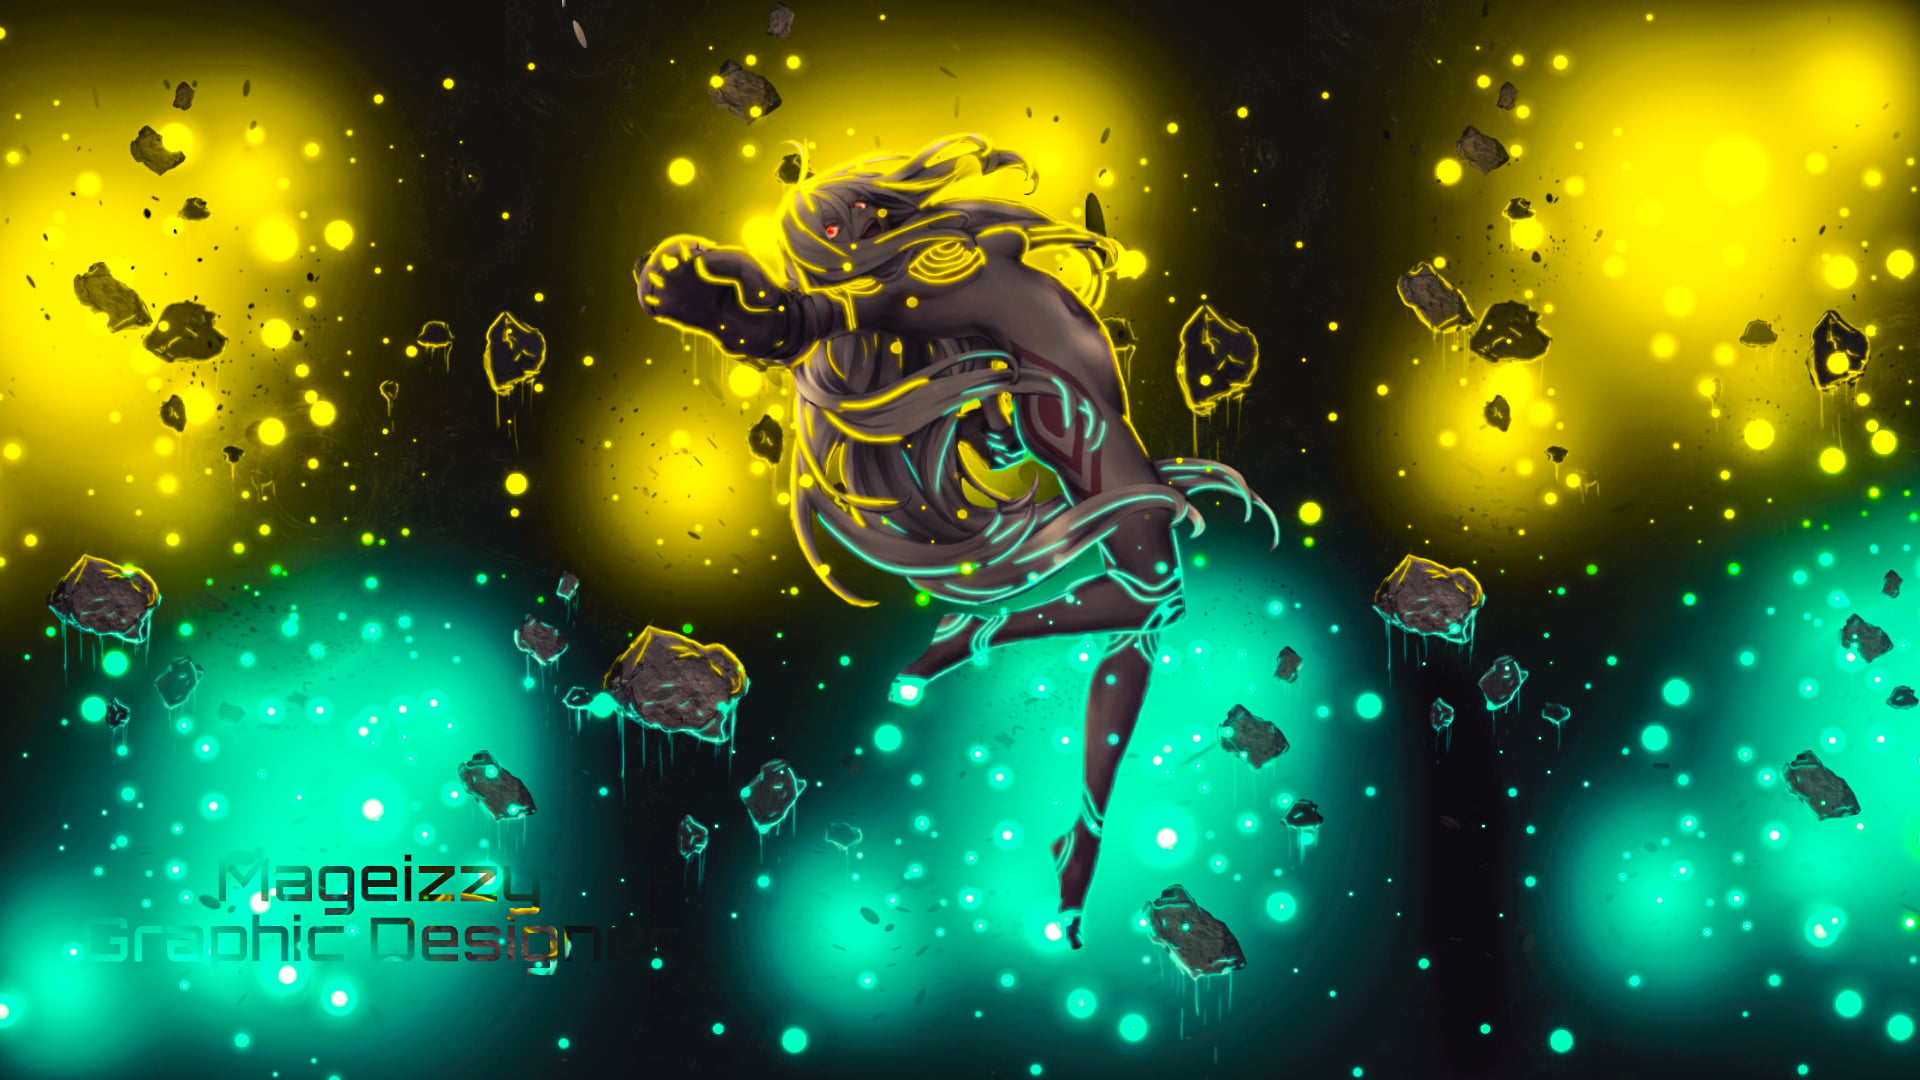 Deadman Wonderland graphic design digital wallpaper, blue, yellow, anime, Deadman Wonderland